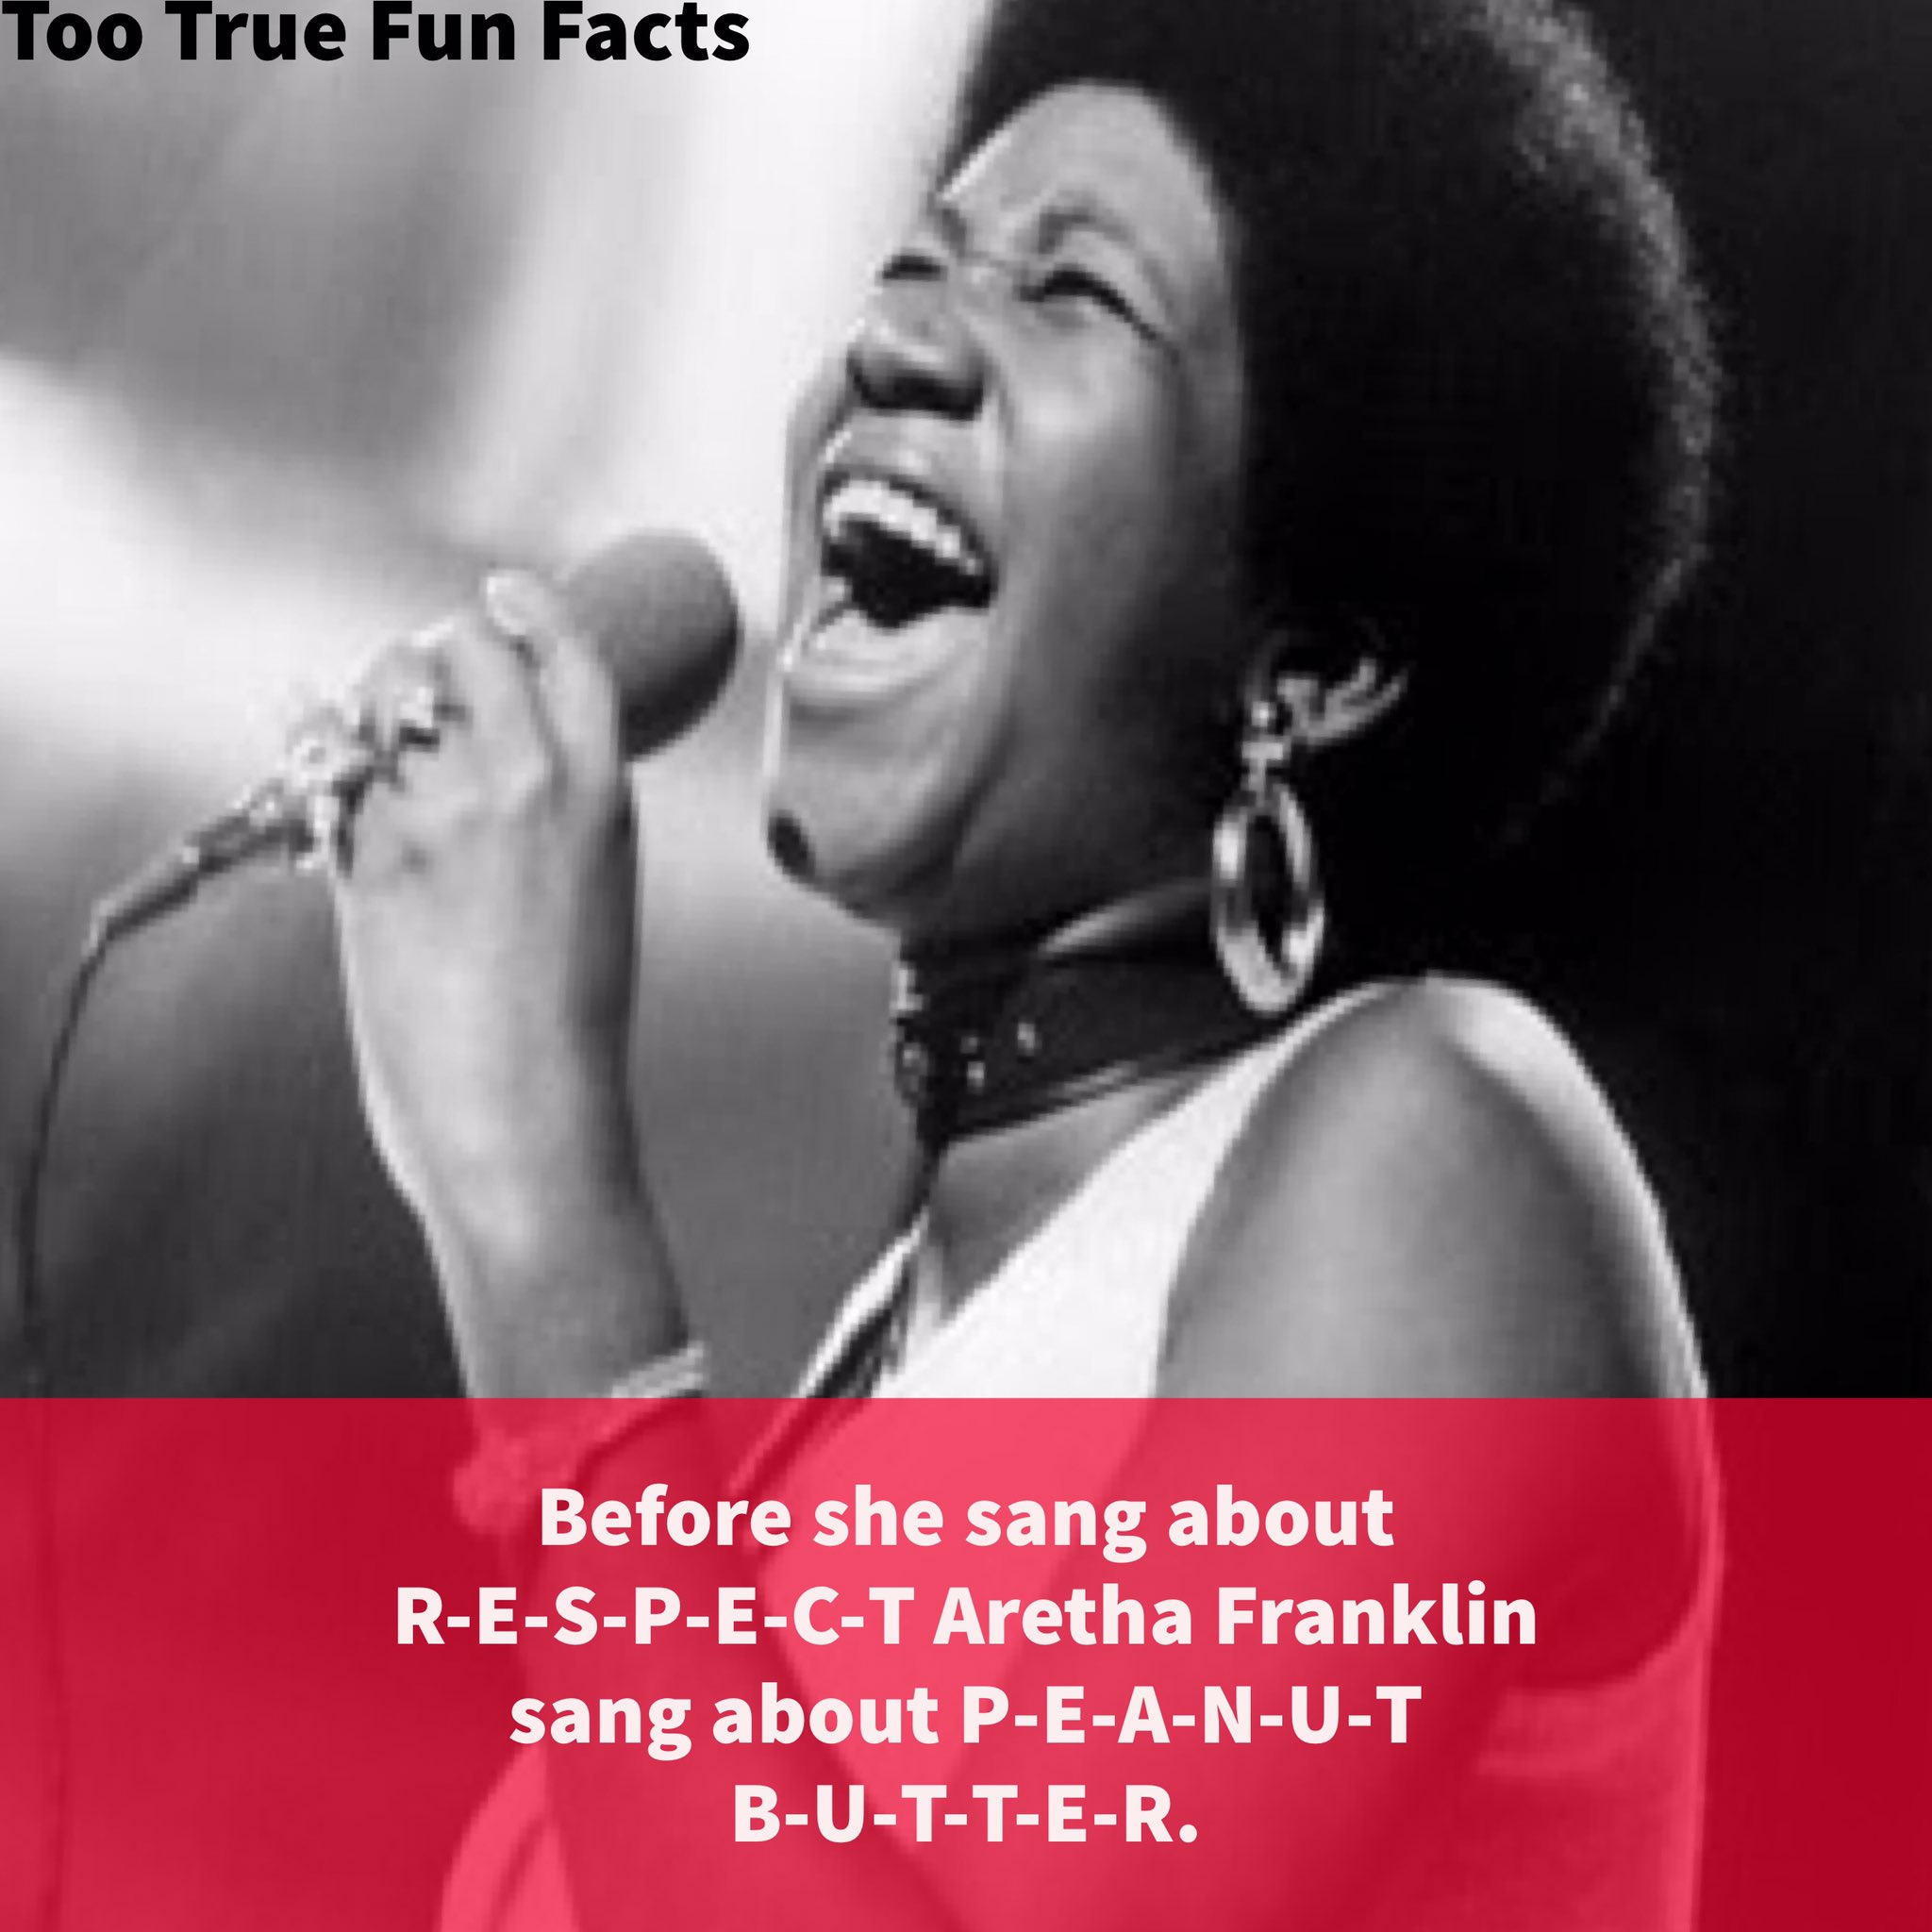 Too True Fun Facts on Twitter: "Music Fun Fact. # ...